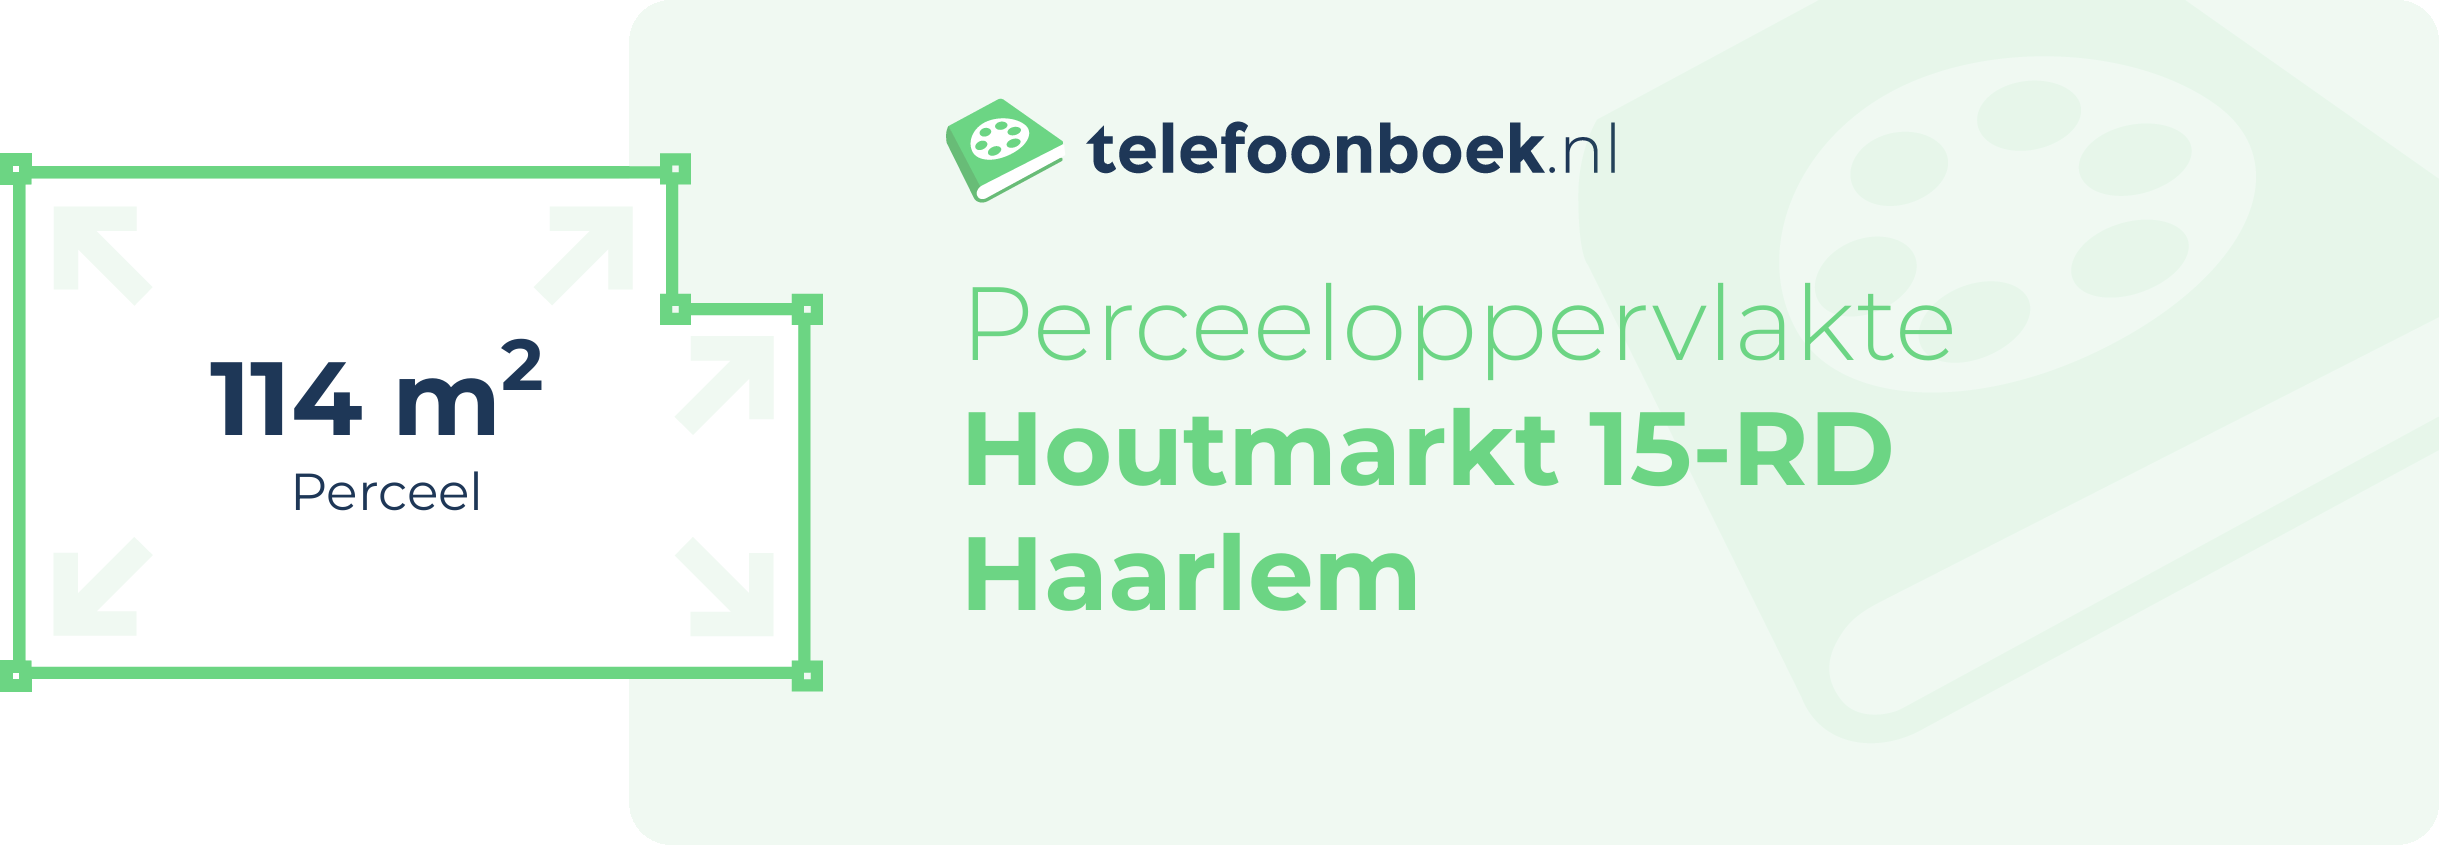 Perceeloppervlakte Houtmarkt 15-RD Haarlem